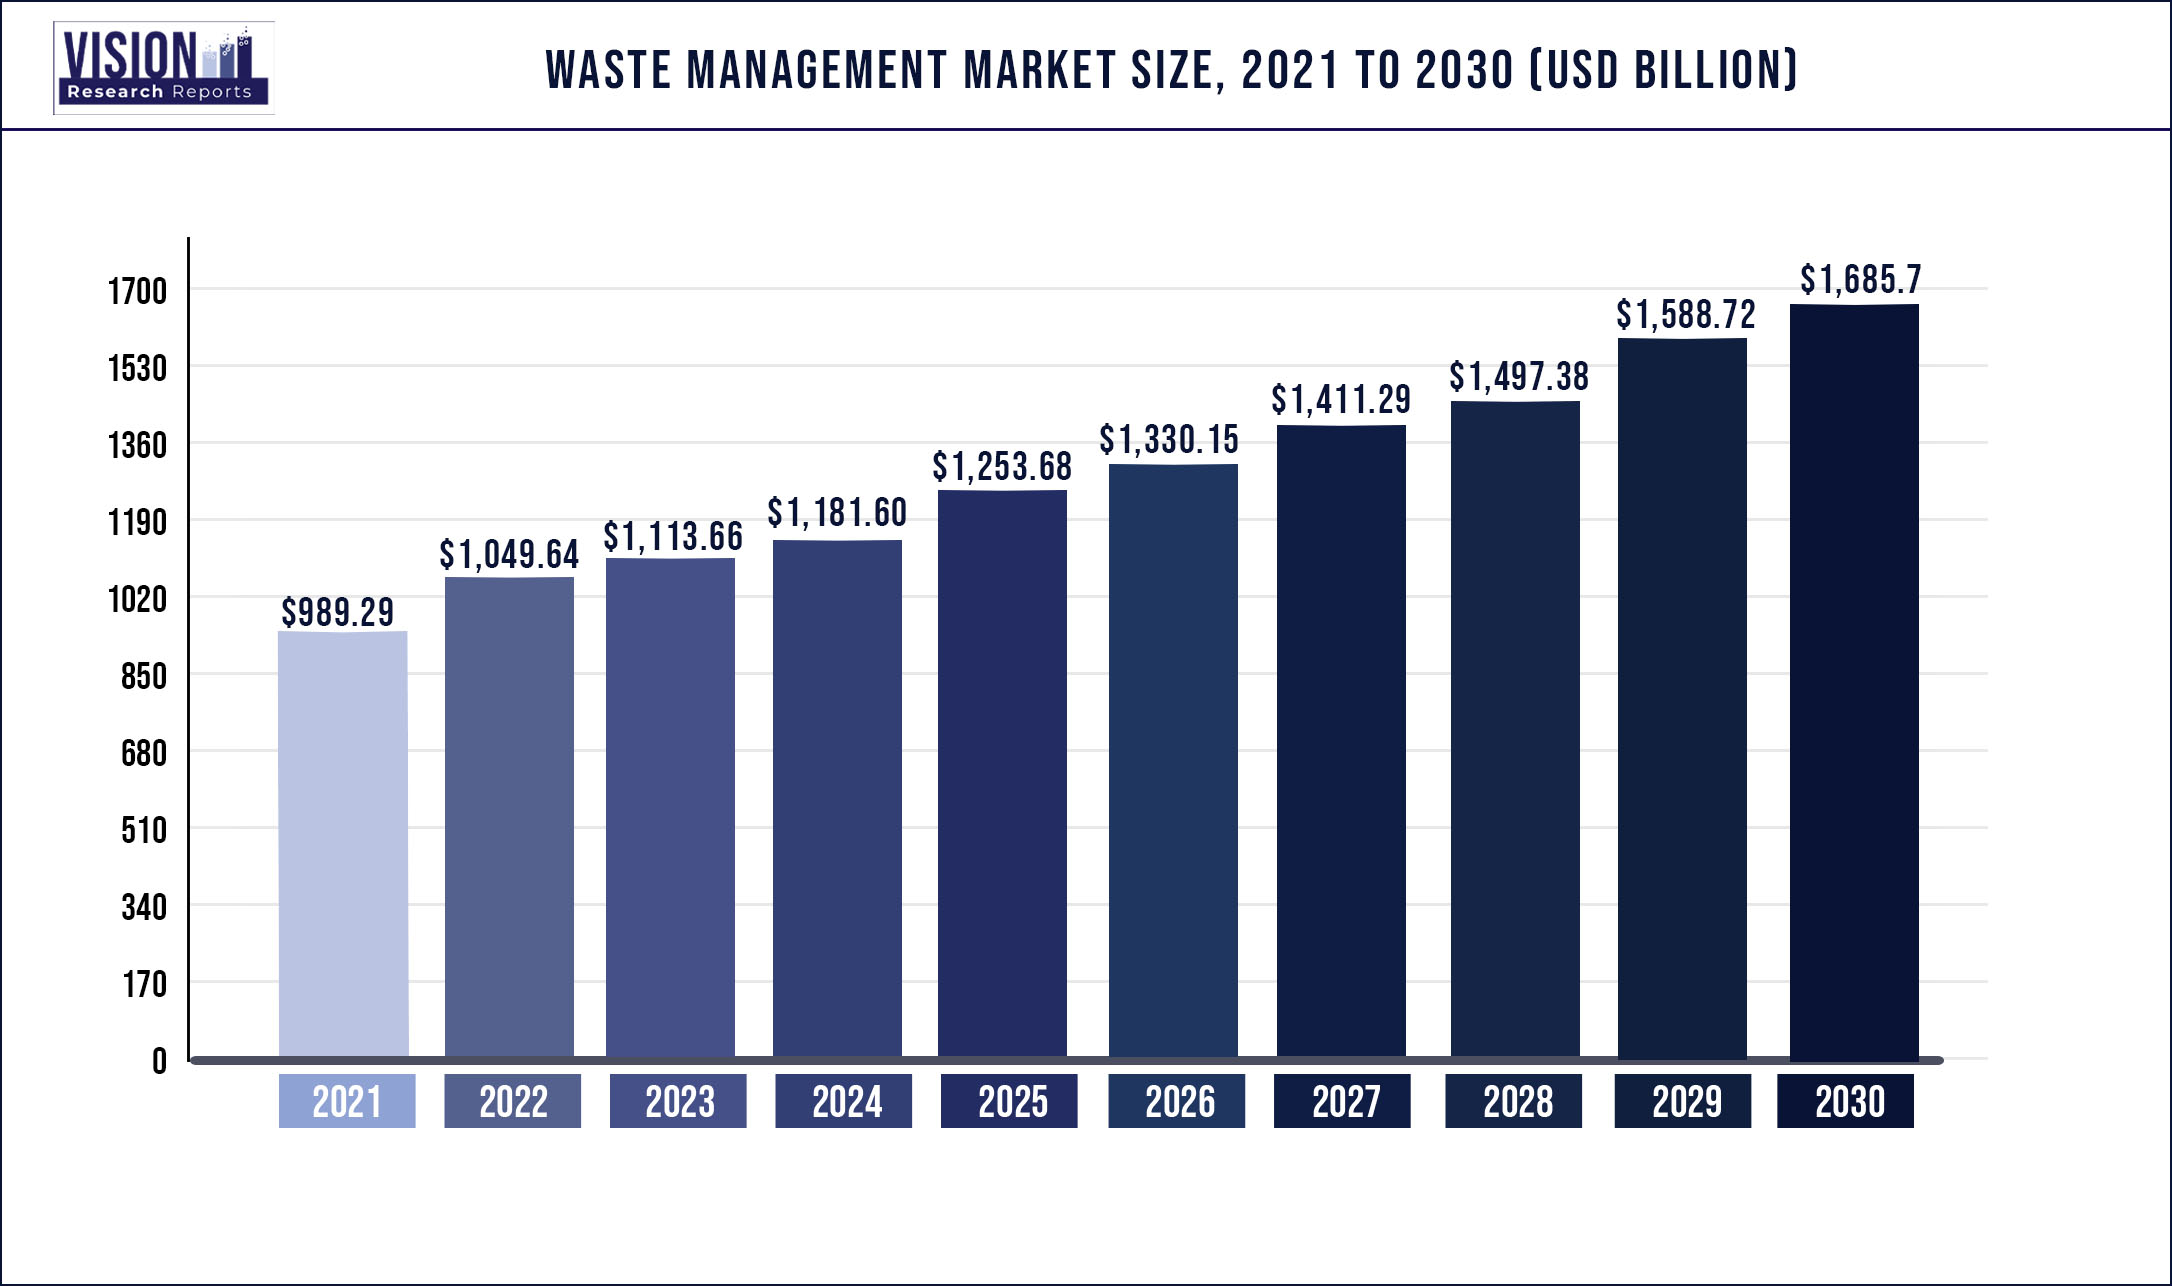 Waste Management Market Size 2021 to 2030